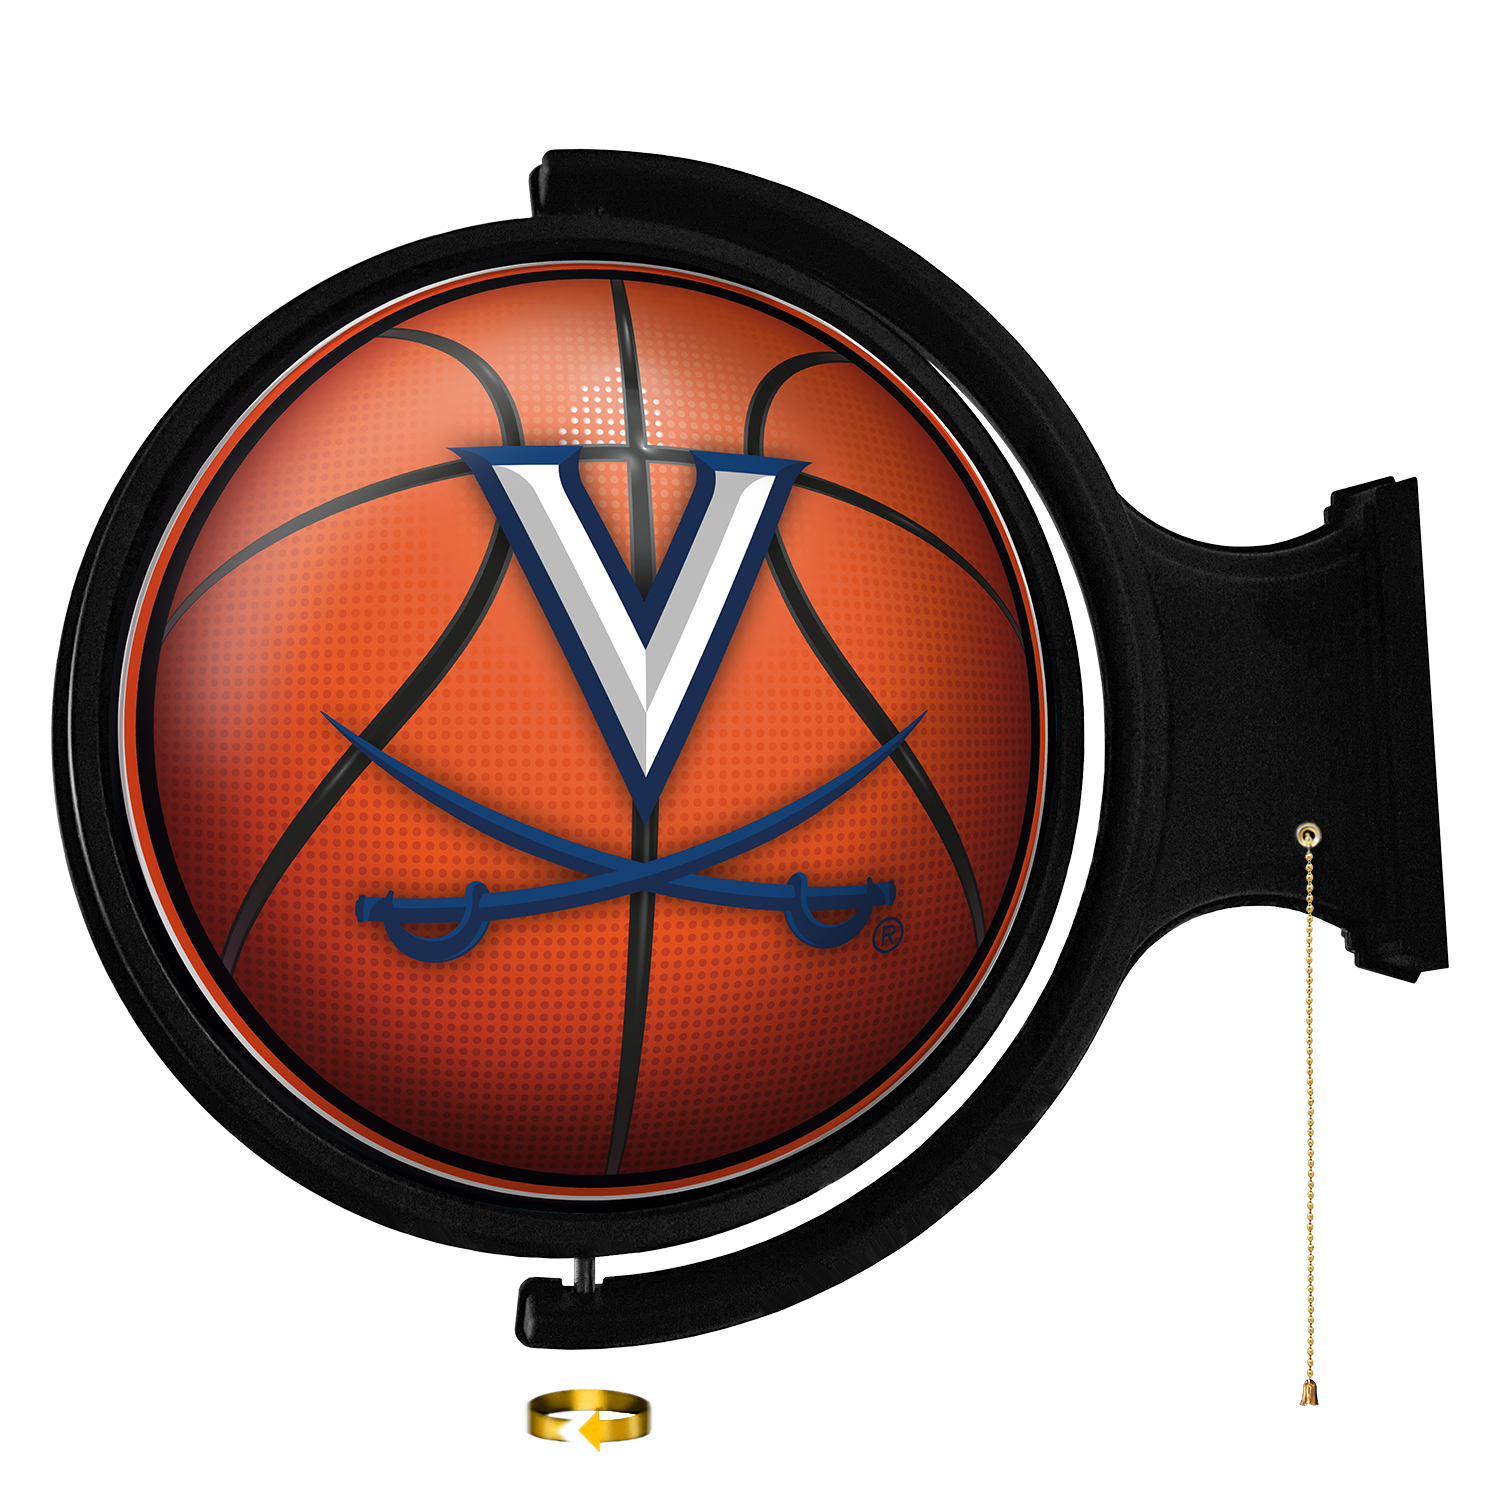 Virginia Cavaliers Round Basketball Rotating Wall Sign